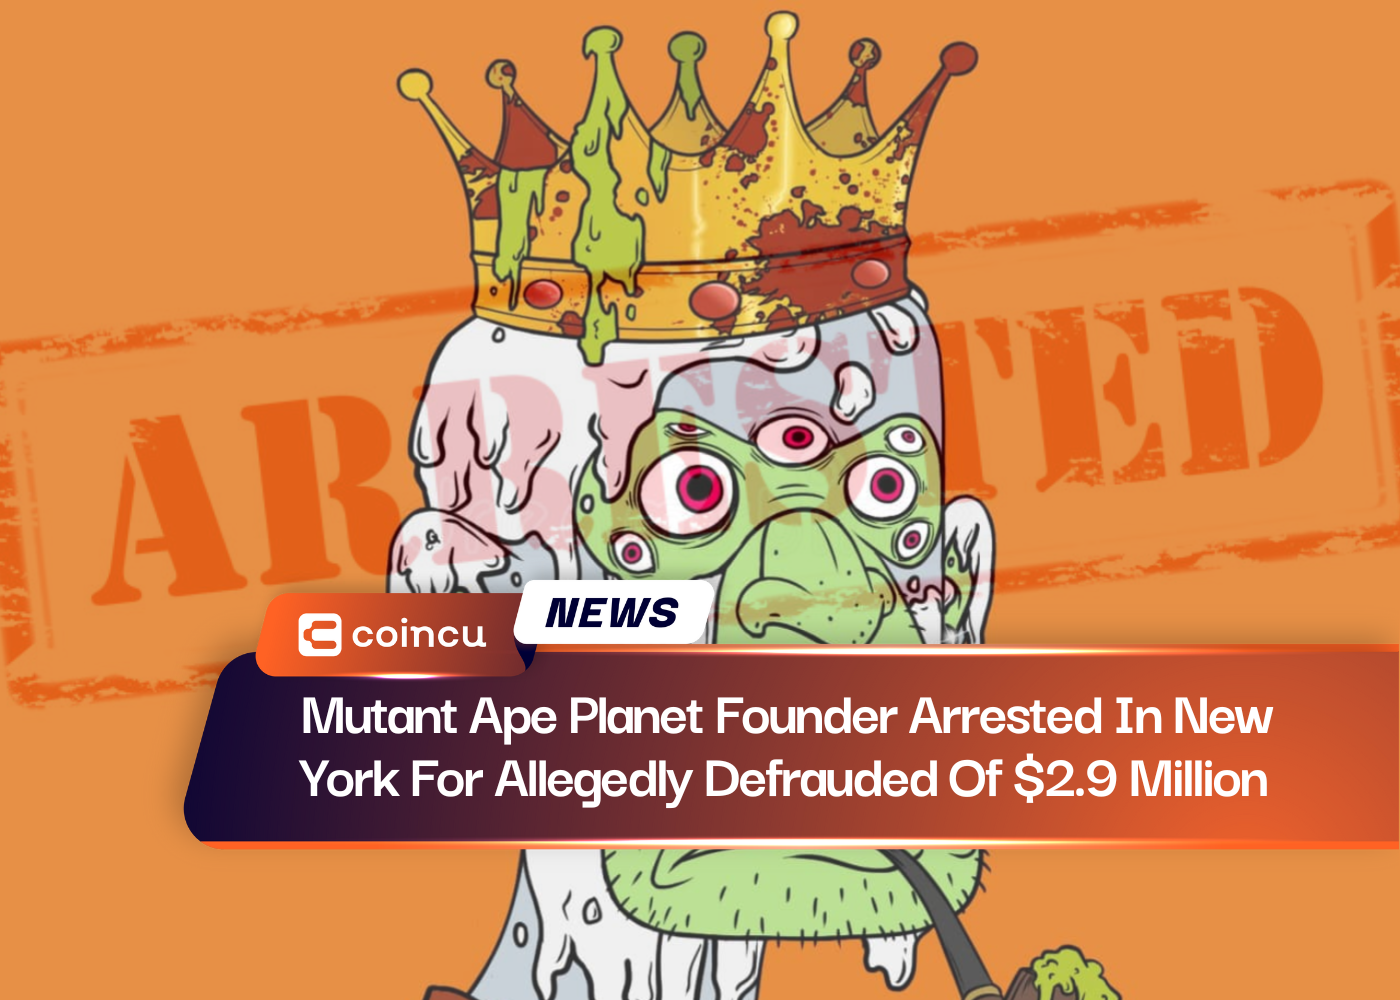 Mutant Ape Planet Founder Arrested In New York For Allegedly Defrauded Of $2.9 Million